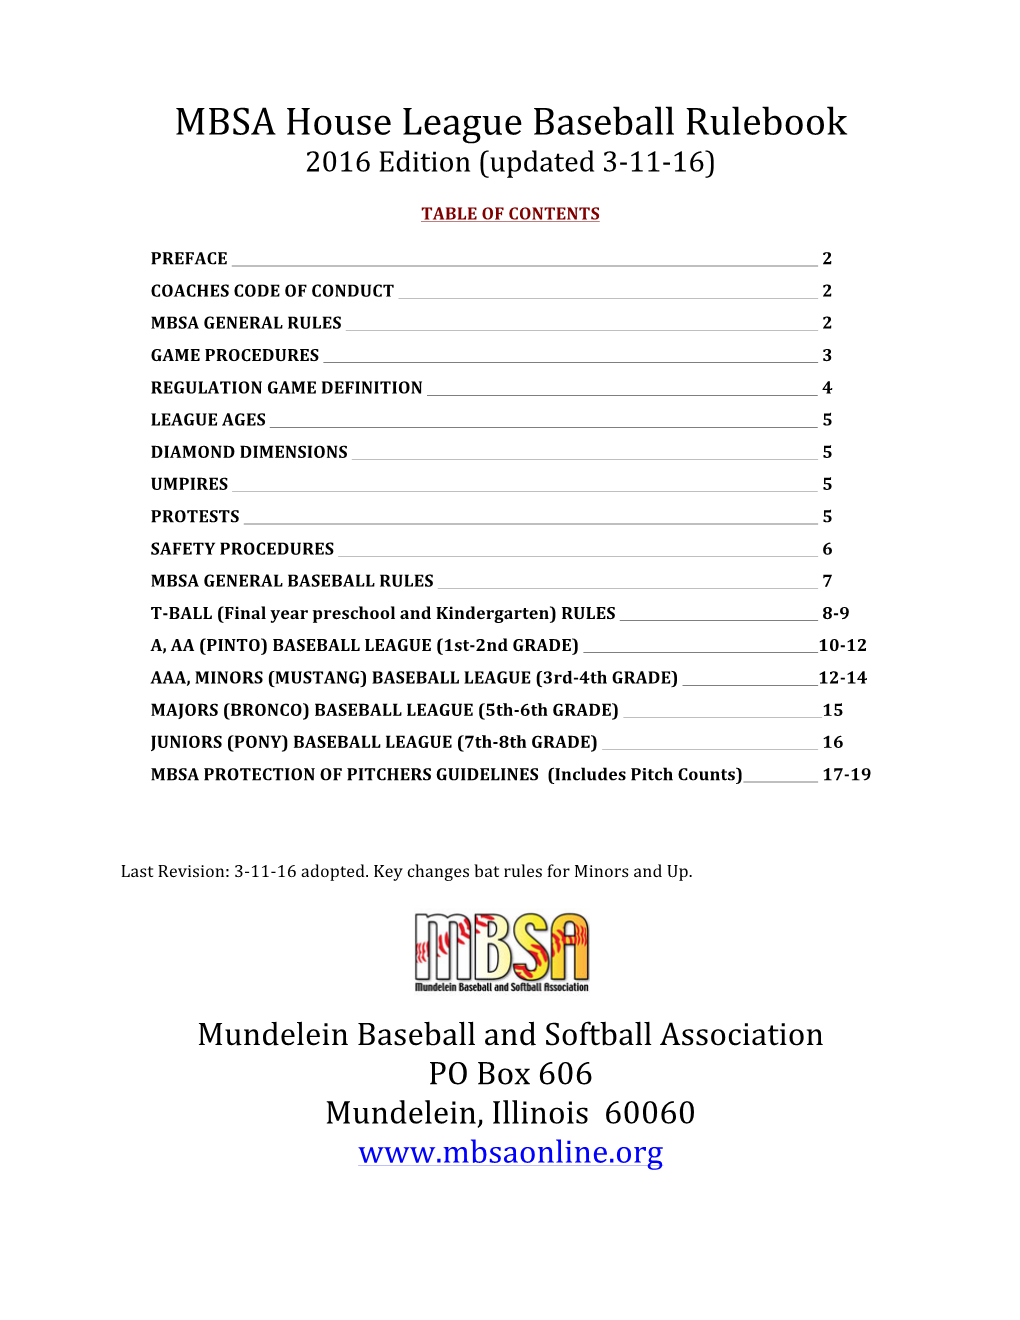 MBSA House League Baseball Rulebook 2016 Edition (Updated 3-11-16)